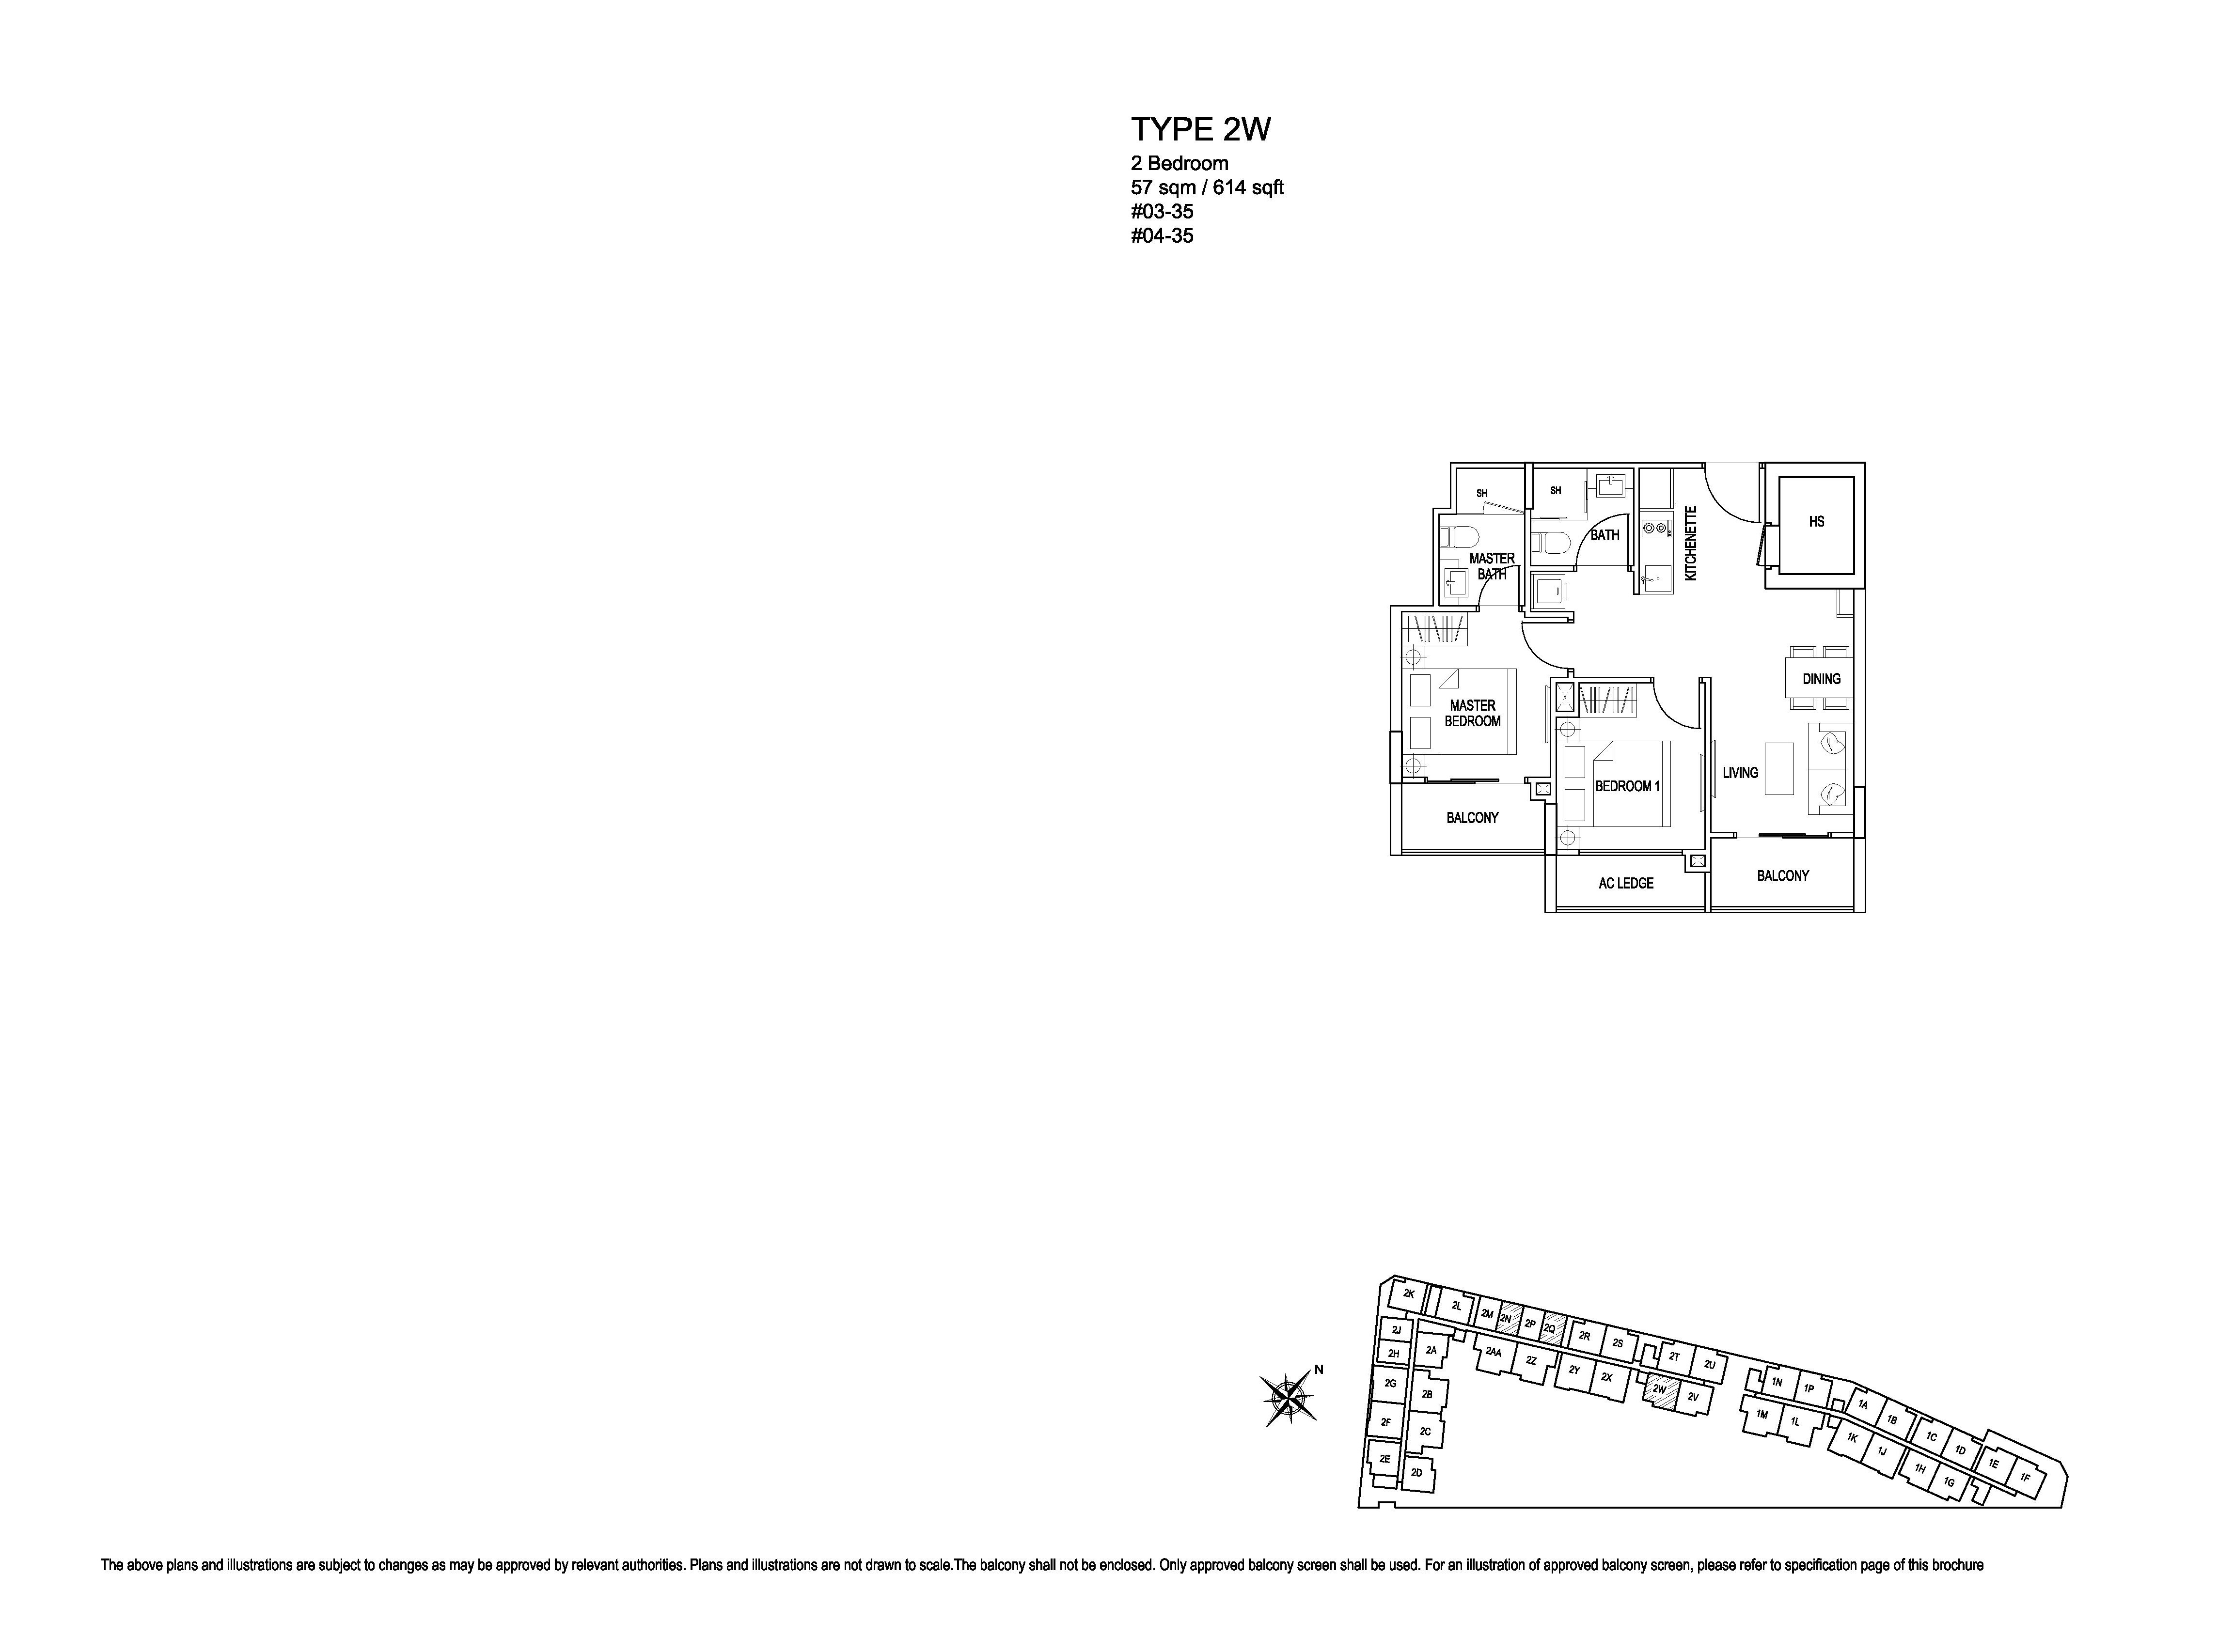 Kensington Square 2 Bedroom Floor Plans Type 2W